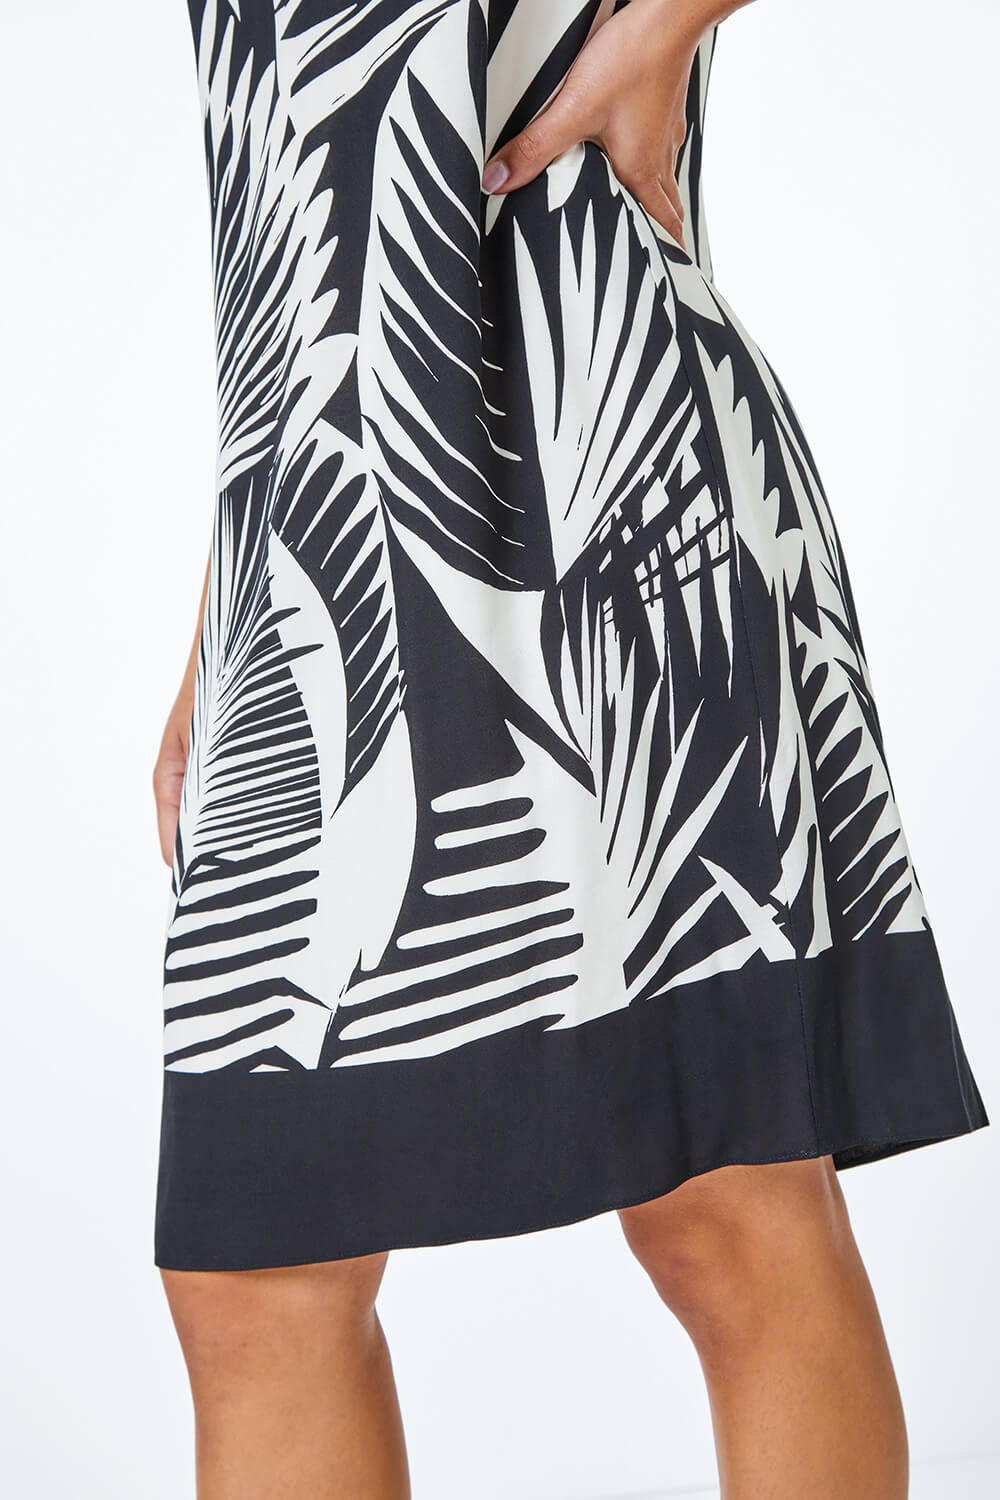 Black Petite Tropical Leaf Print Shift Dress, Image 5 of 5